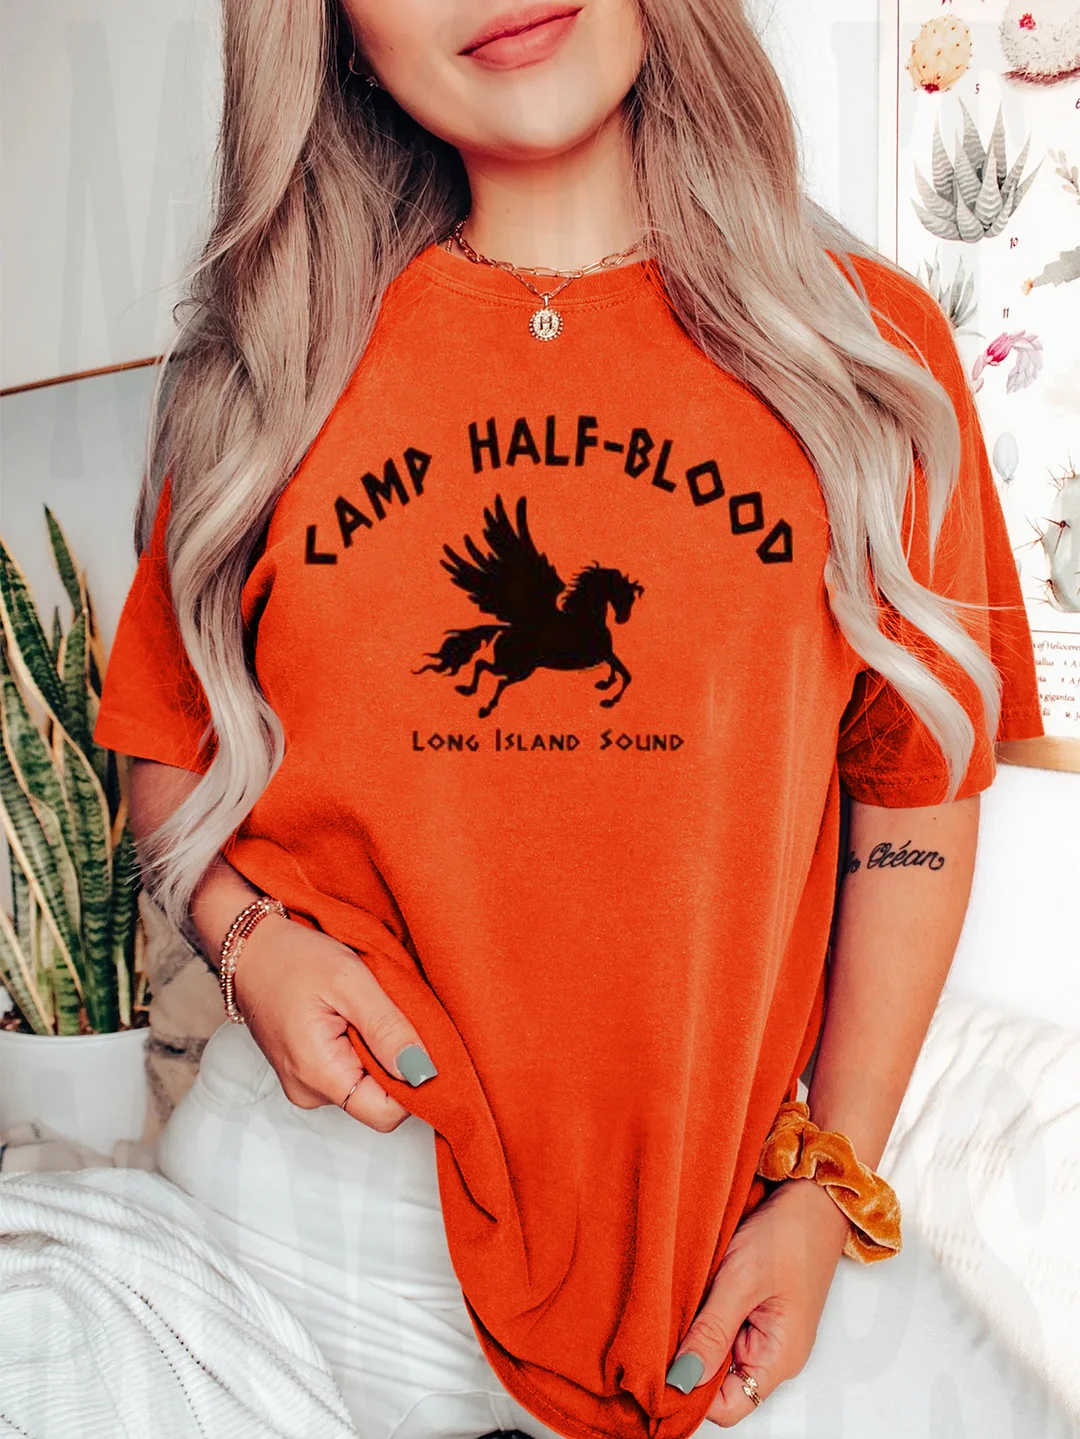 Camp Halfblood Shirt, Camp Half Blood Tshirt, Percy Jackson Shirt / DarkAcademias /Darkacademias